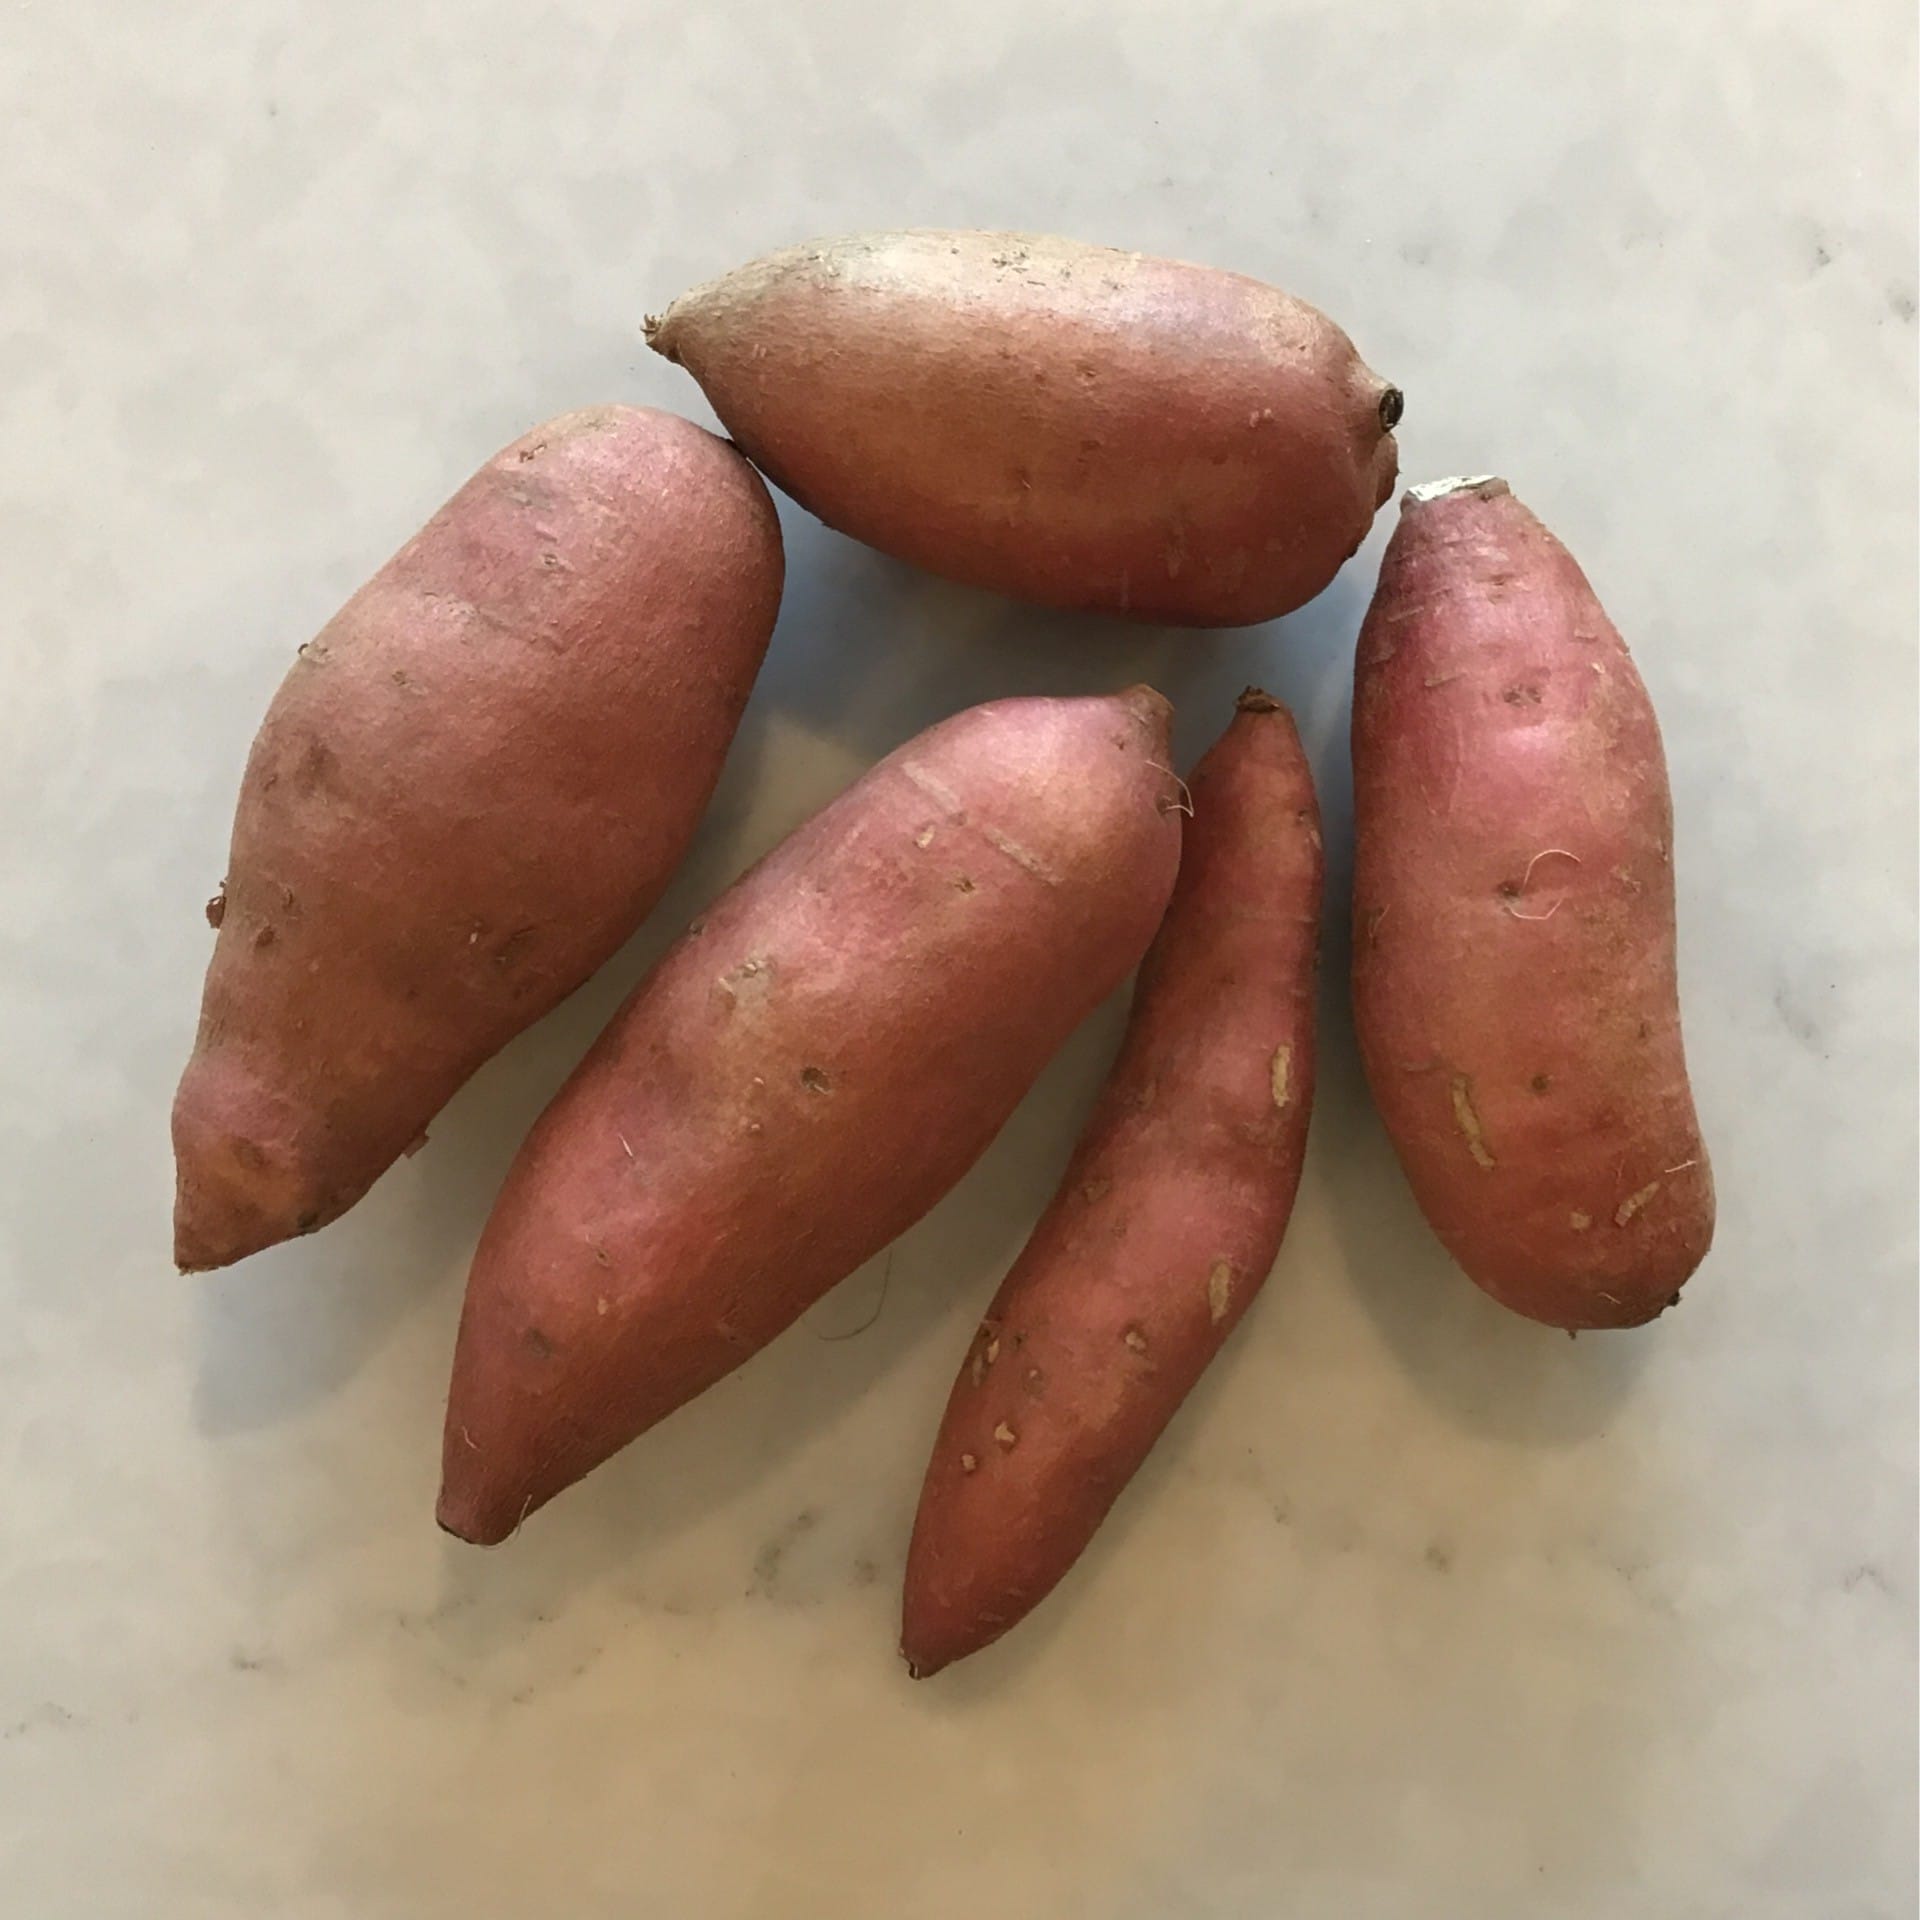 sweet potatoes usda organic large